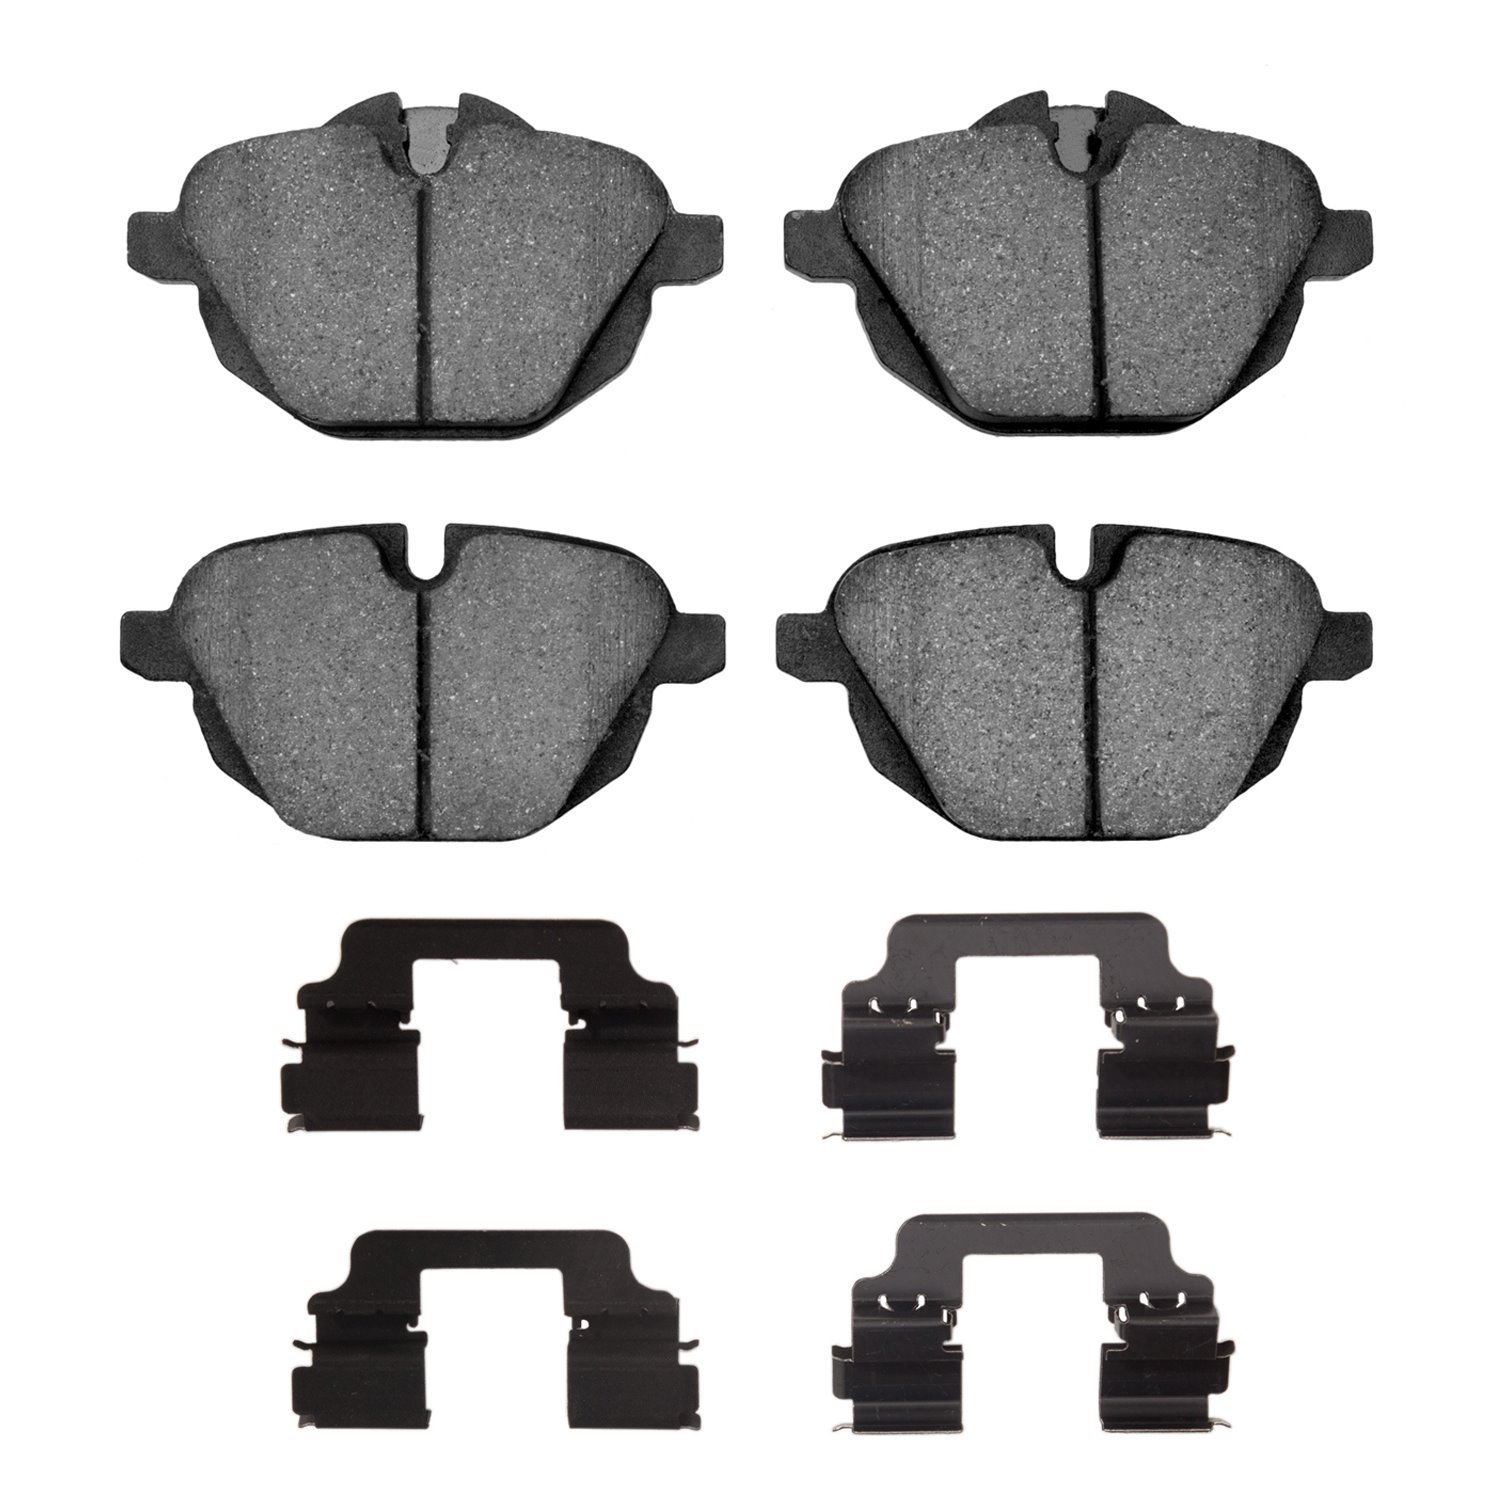 1552-1473-01 5000 Advanced Low-Metallic Brake Pads & Hardware Kit, Fits Select BMW, Position: Rear